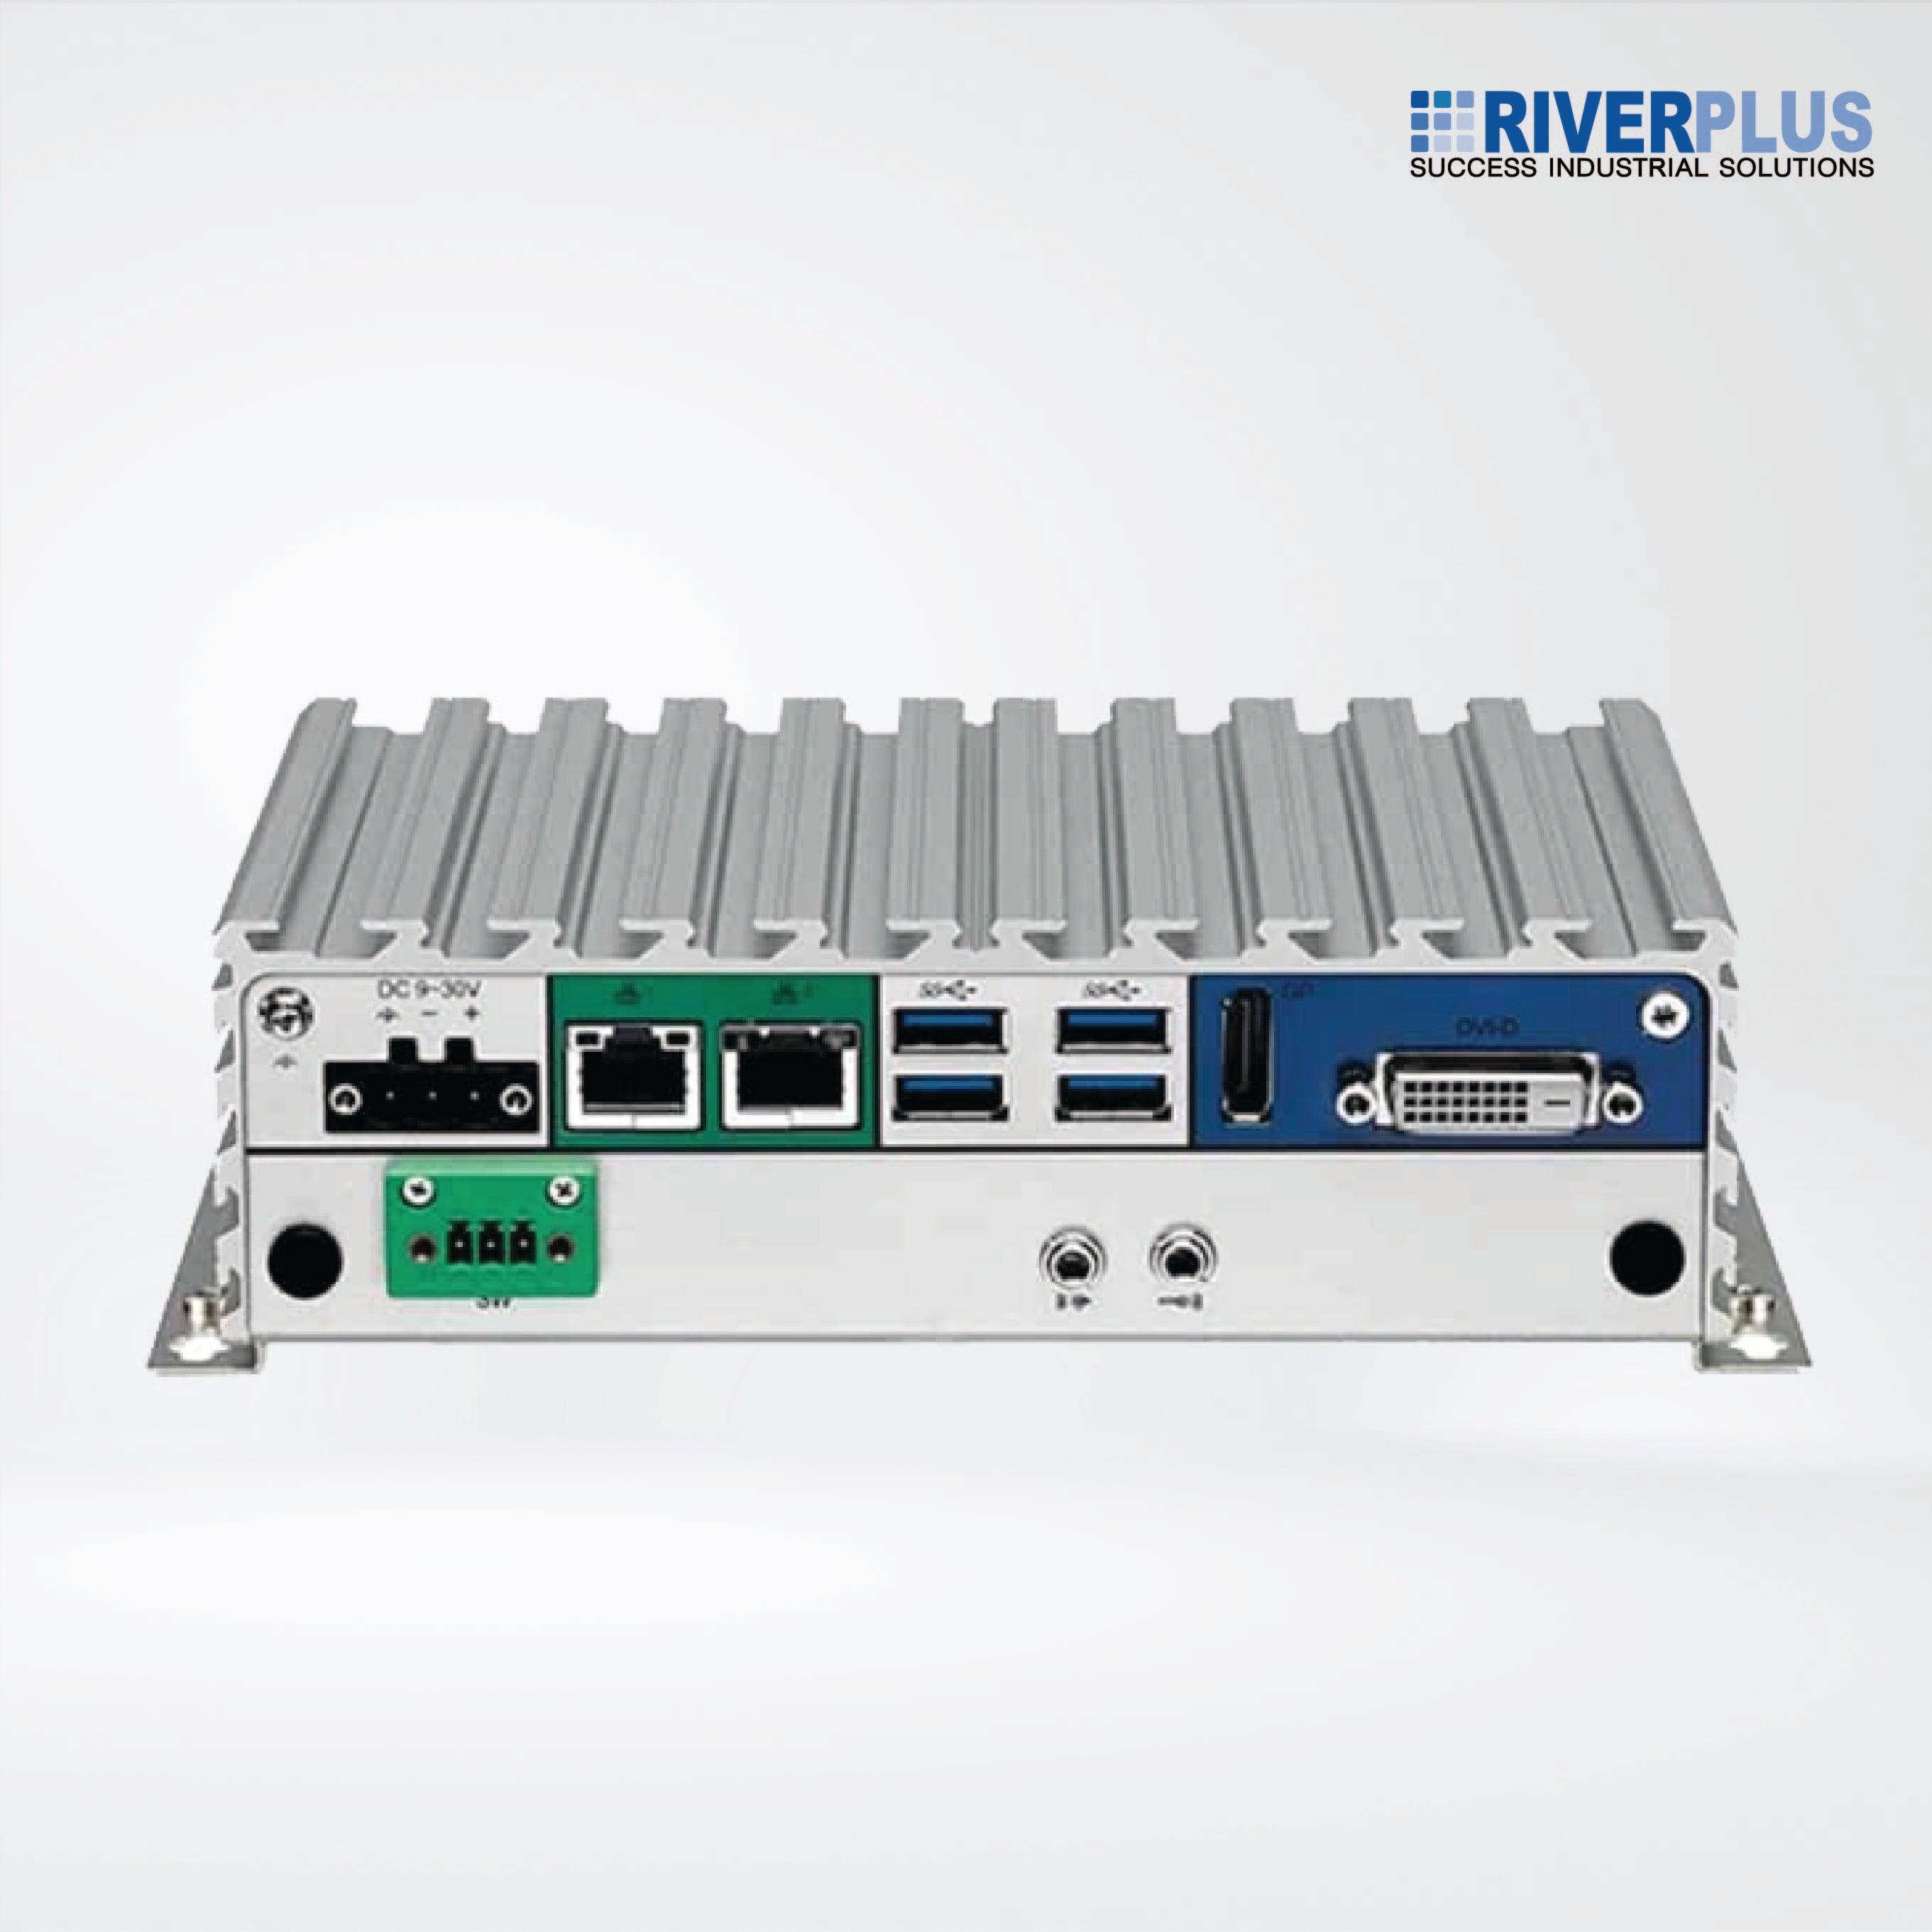 NISE 107-E3930 Intel Atom® x5-E3930 Dual Core Fanless System - Riverplus